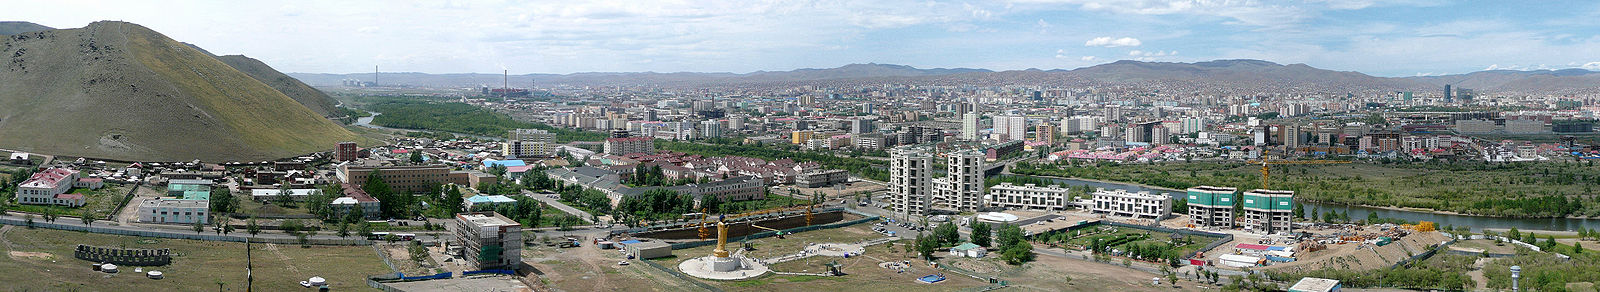 Panorama von Ulaanbaatar (2009)